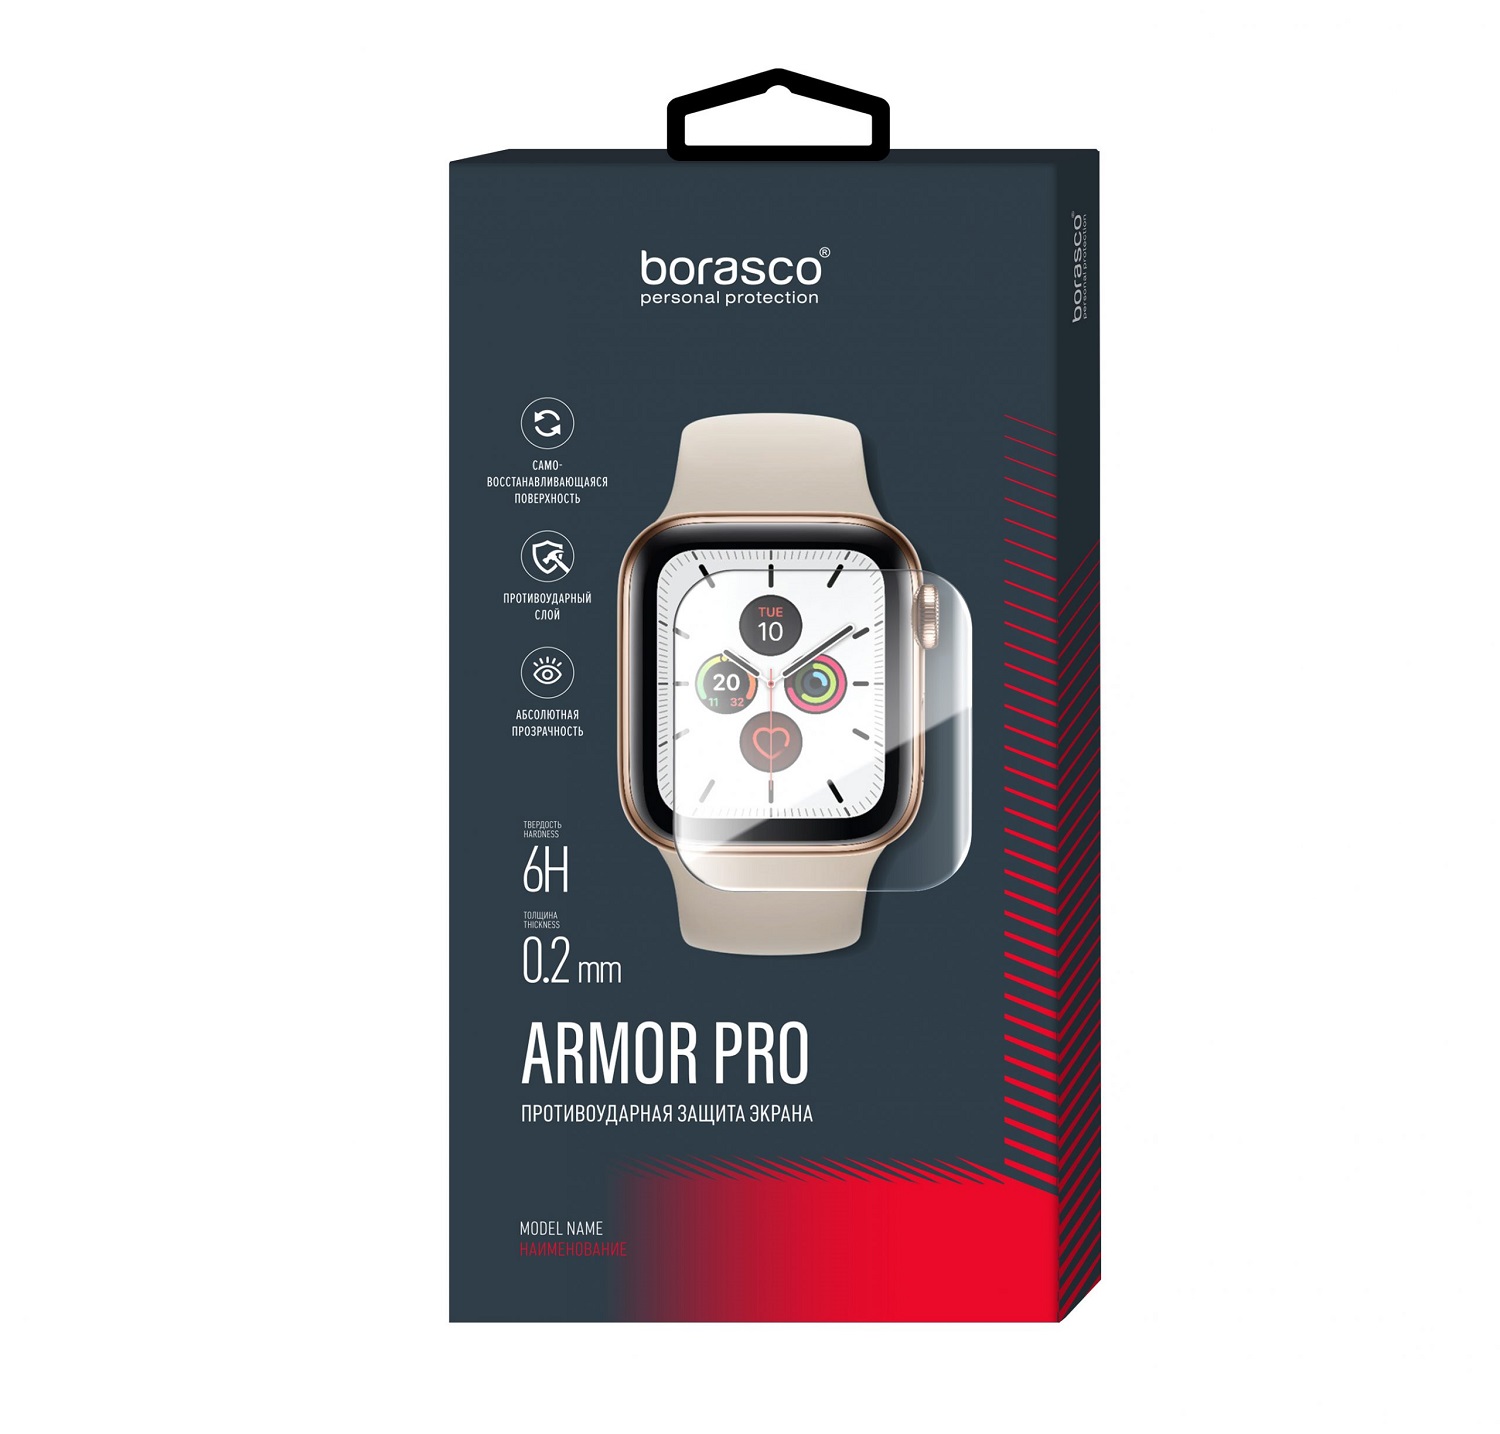 Защита экрана BoraSCO Armor Pro для Xiaomi Mi band 2